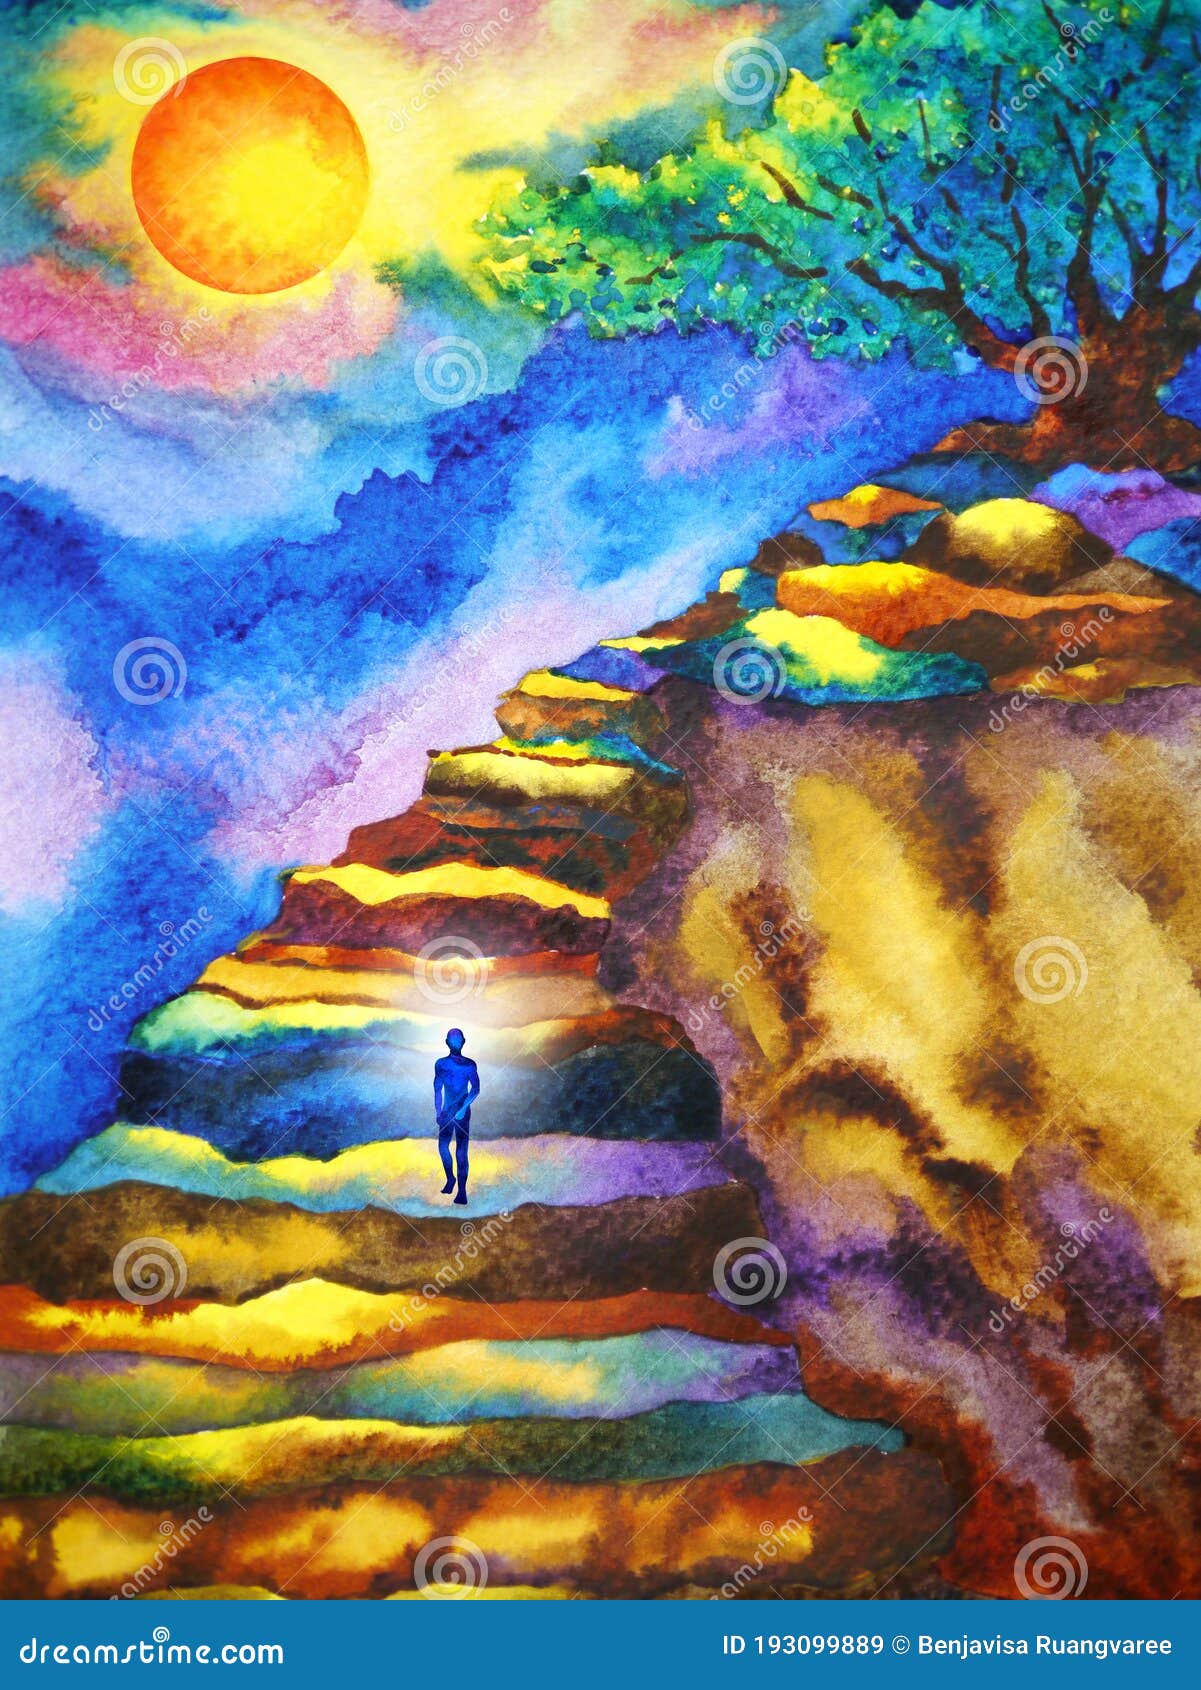 mind spiritual human meditation on mountain abstract art watercolor painting   drawing